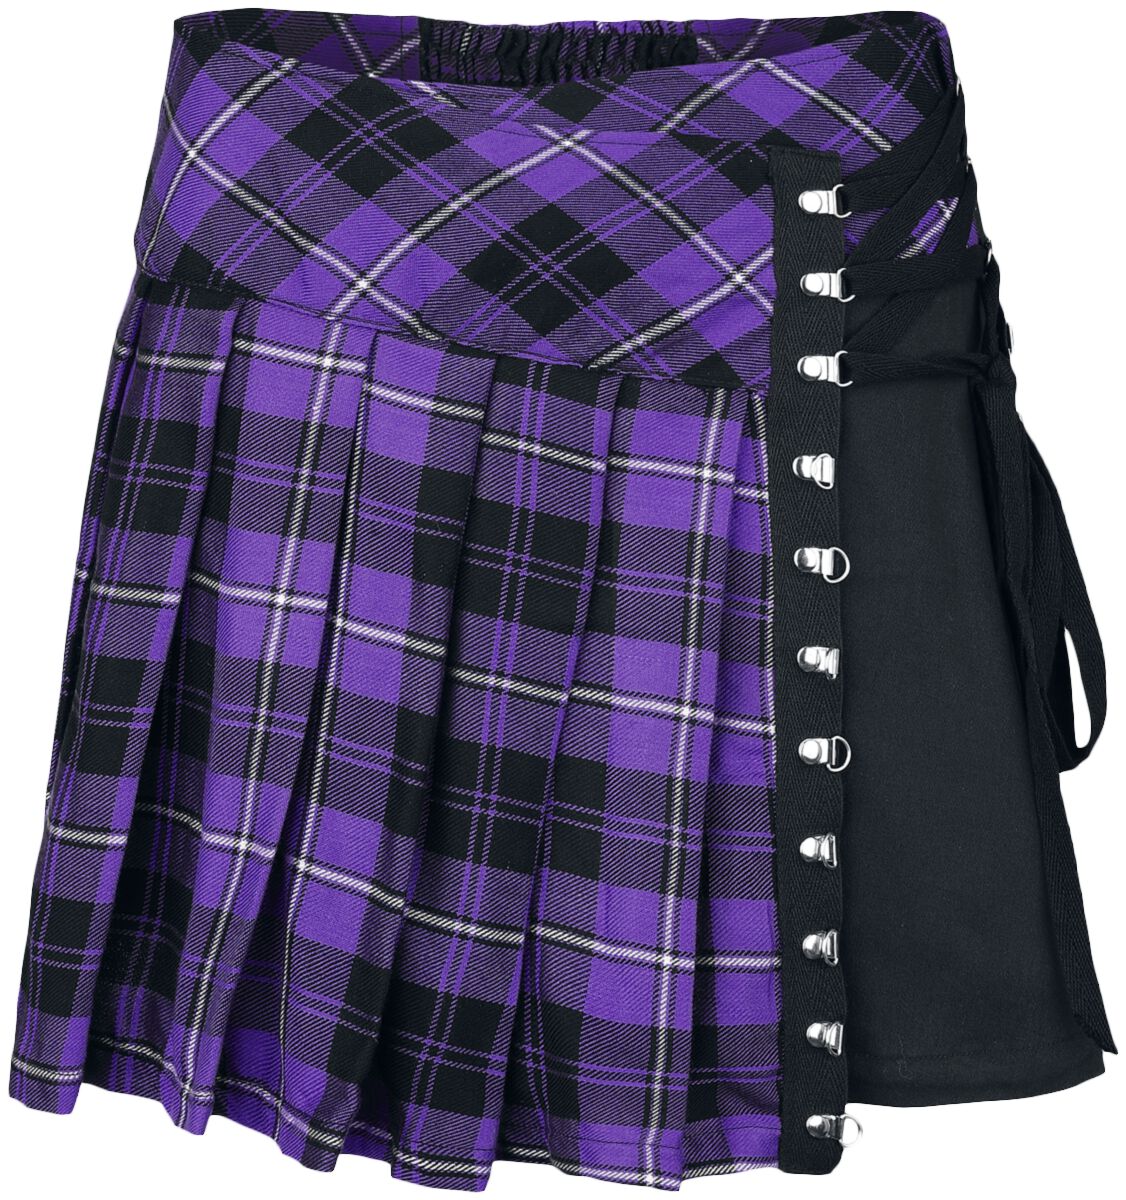 Image of Minigonna Gothic di Chemical Black - Hybrid skirt - XS a 4XL - Donna - viola/nero